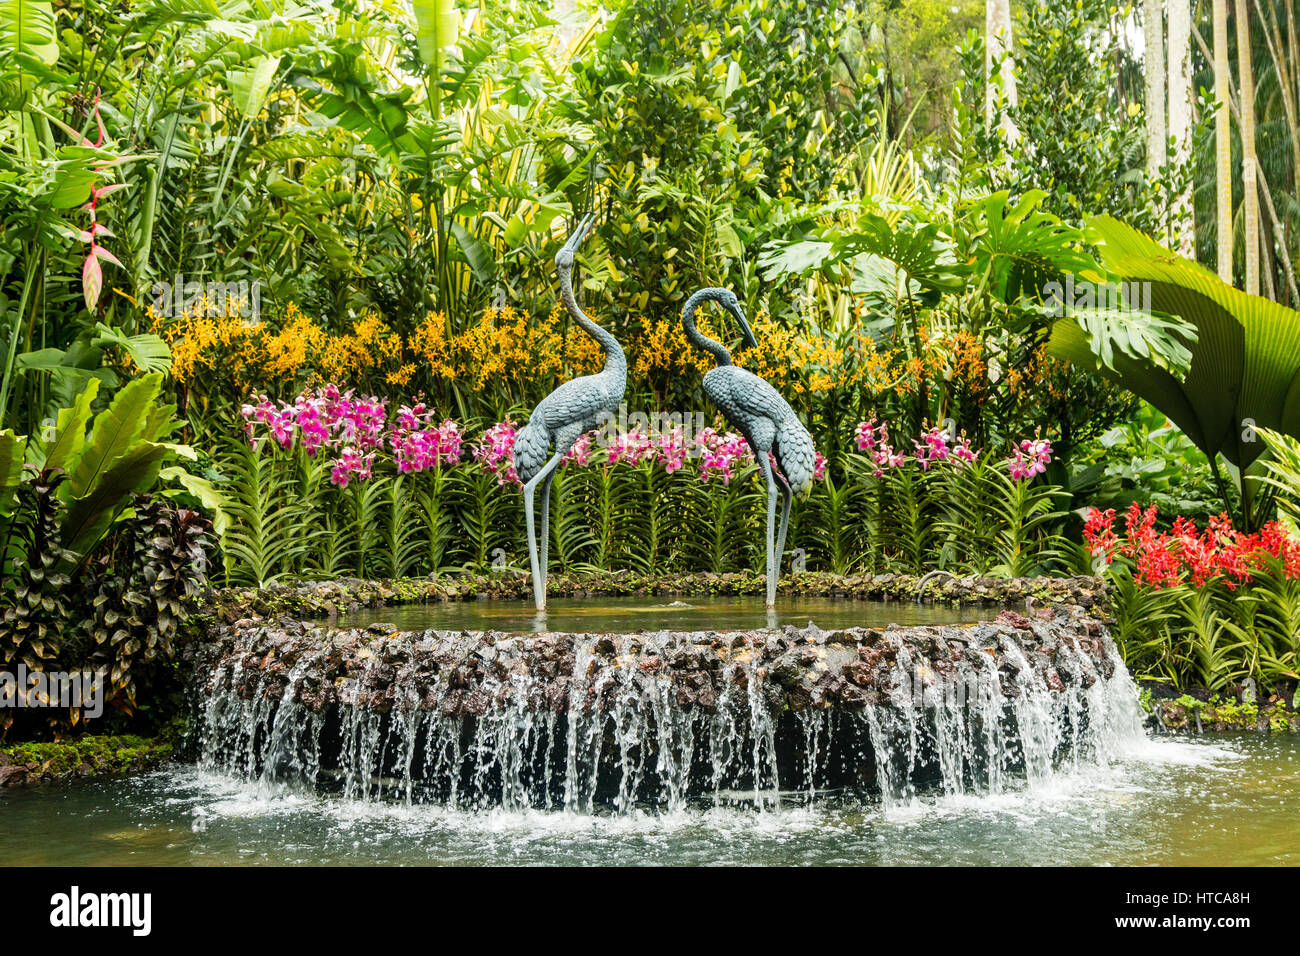 Elegante scultura di gru in una fontana a cascata circondata da splendide orchidee nel giardino di orchidee, Singapore Botanic Gardens, Asia Foto Stock